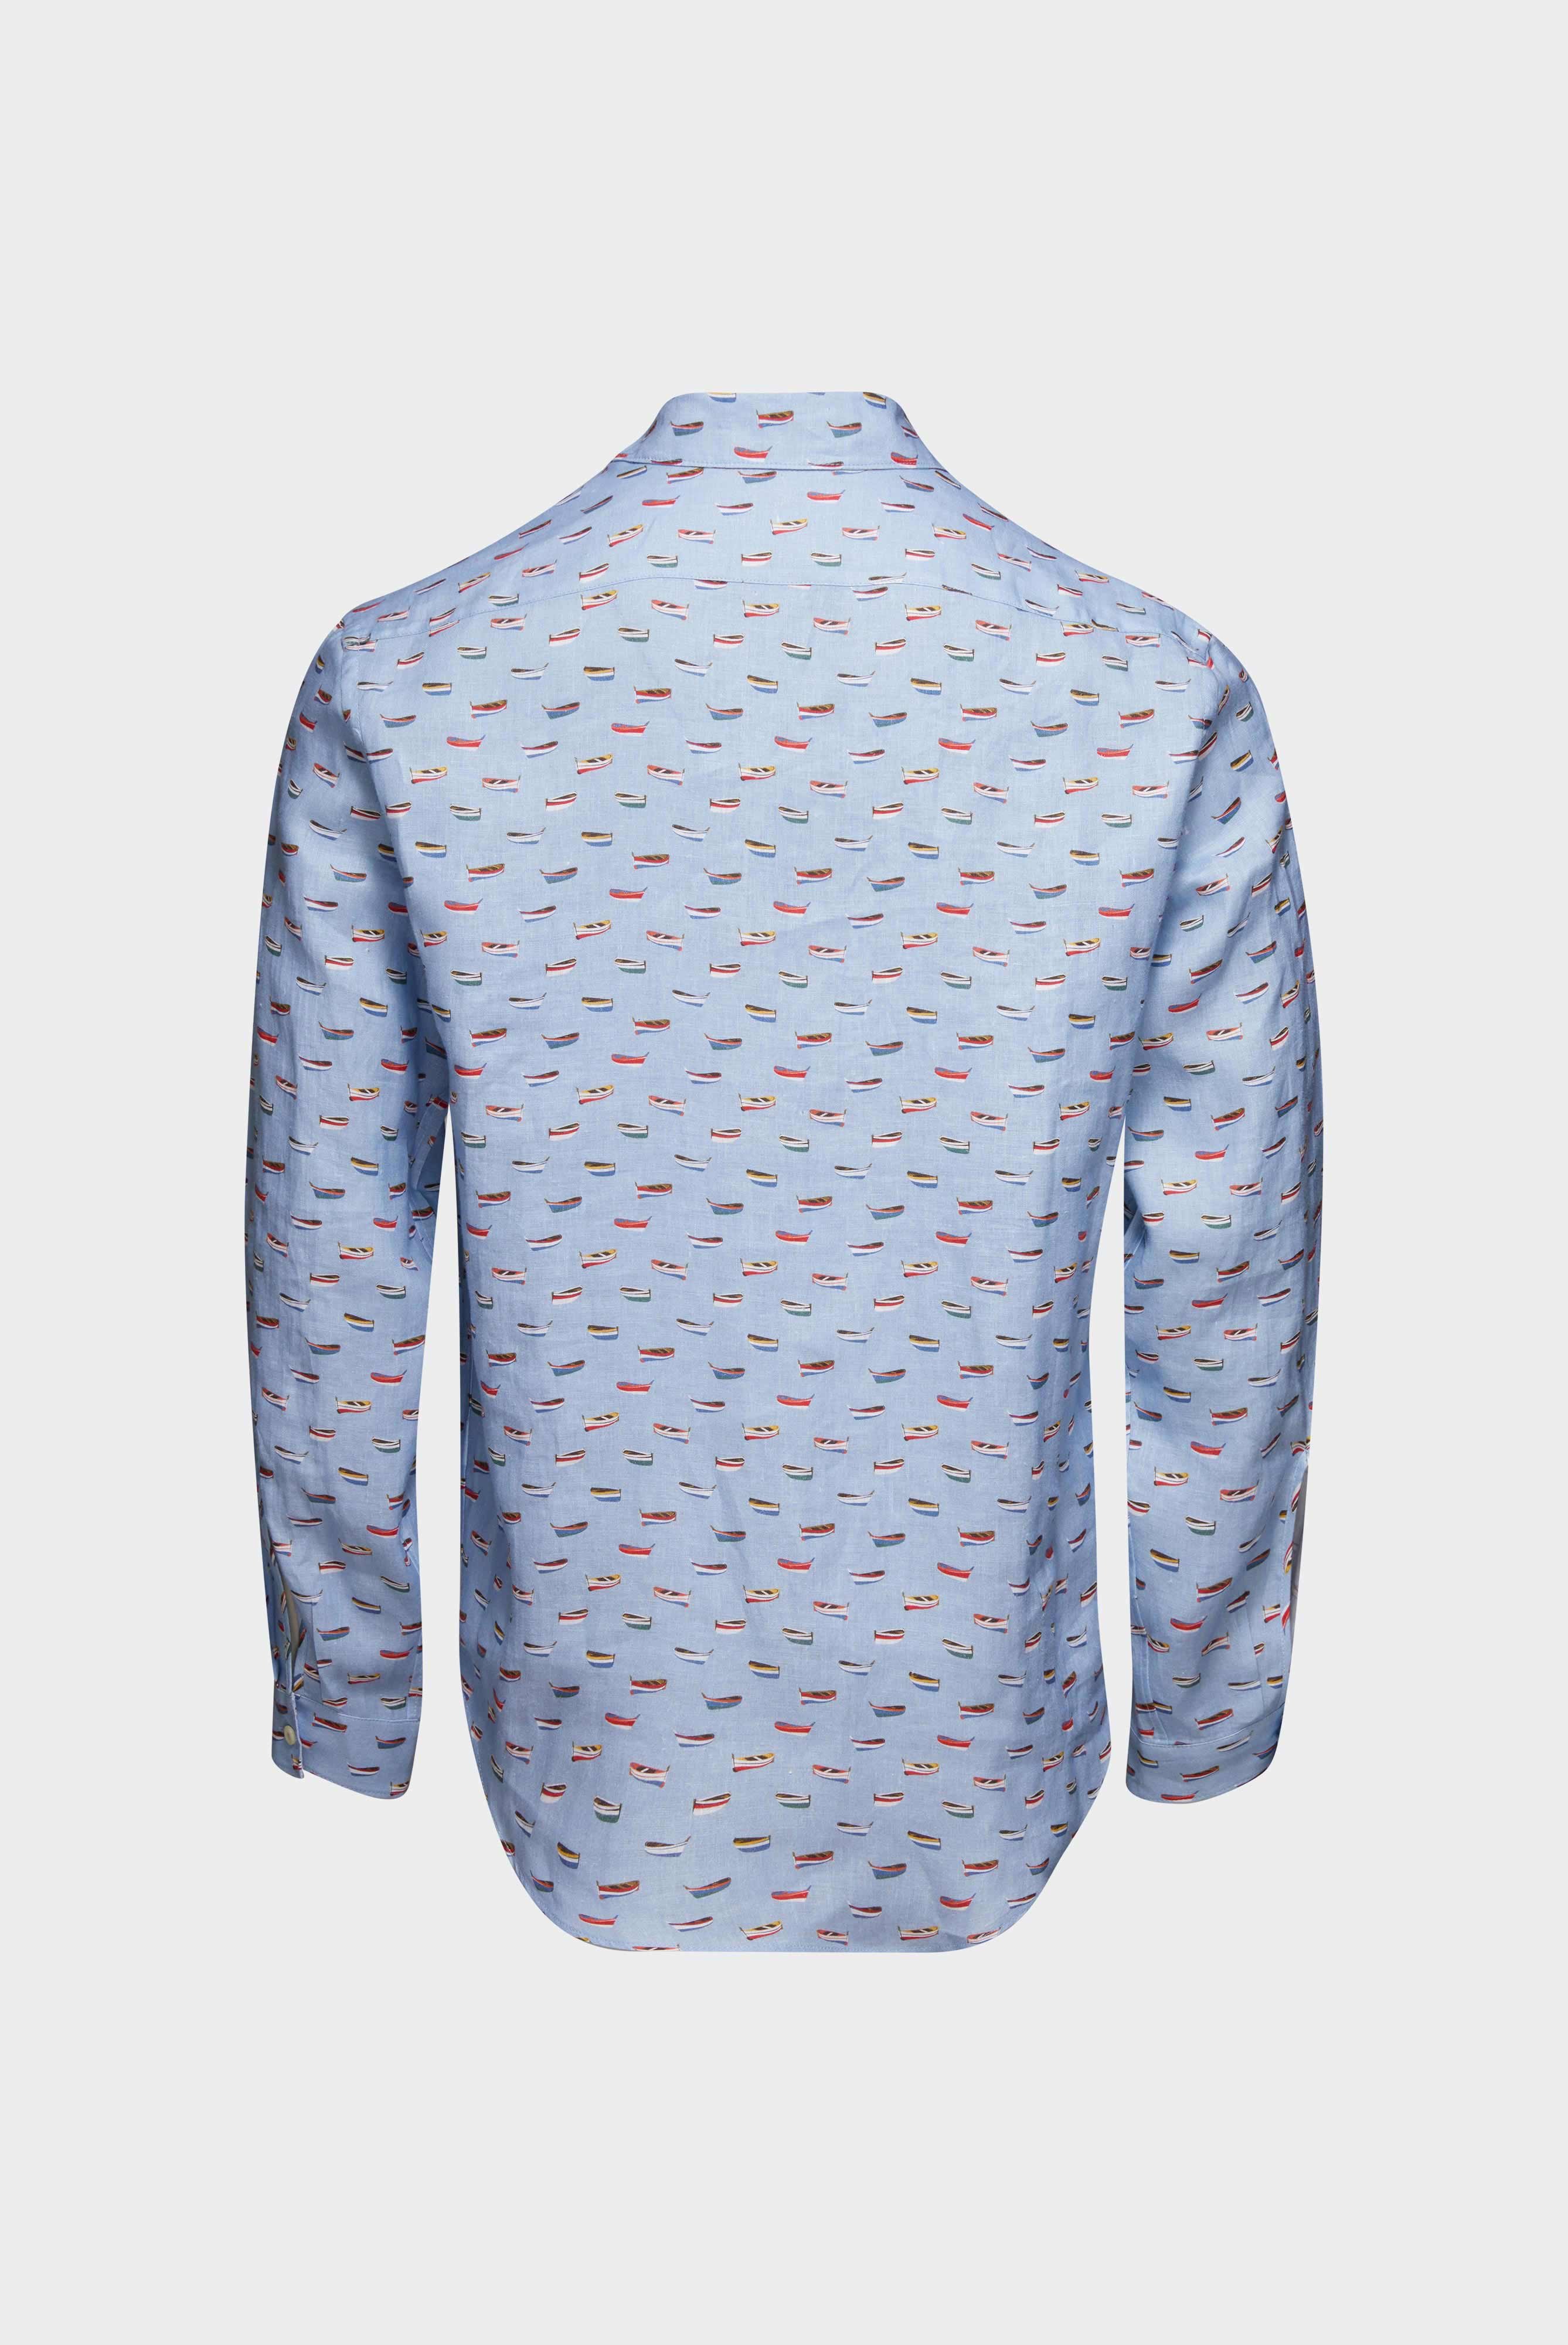 Casual Shirts+Linen Shirt with Boat Print+20.2020.9V.170348.730.38